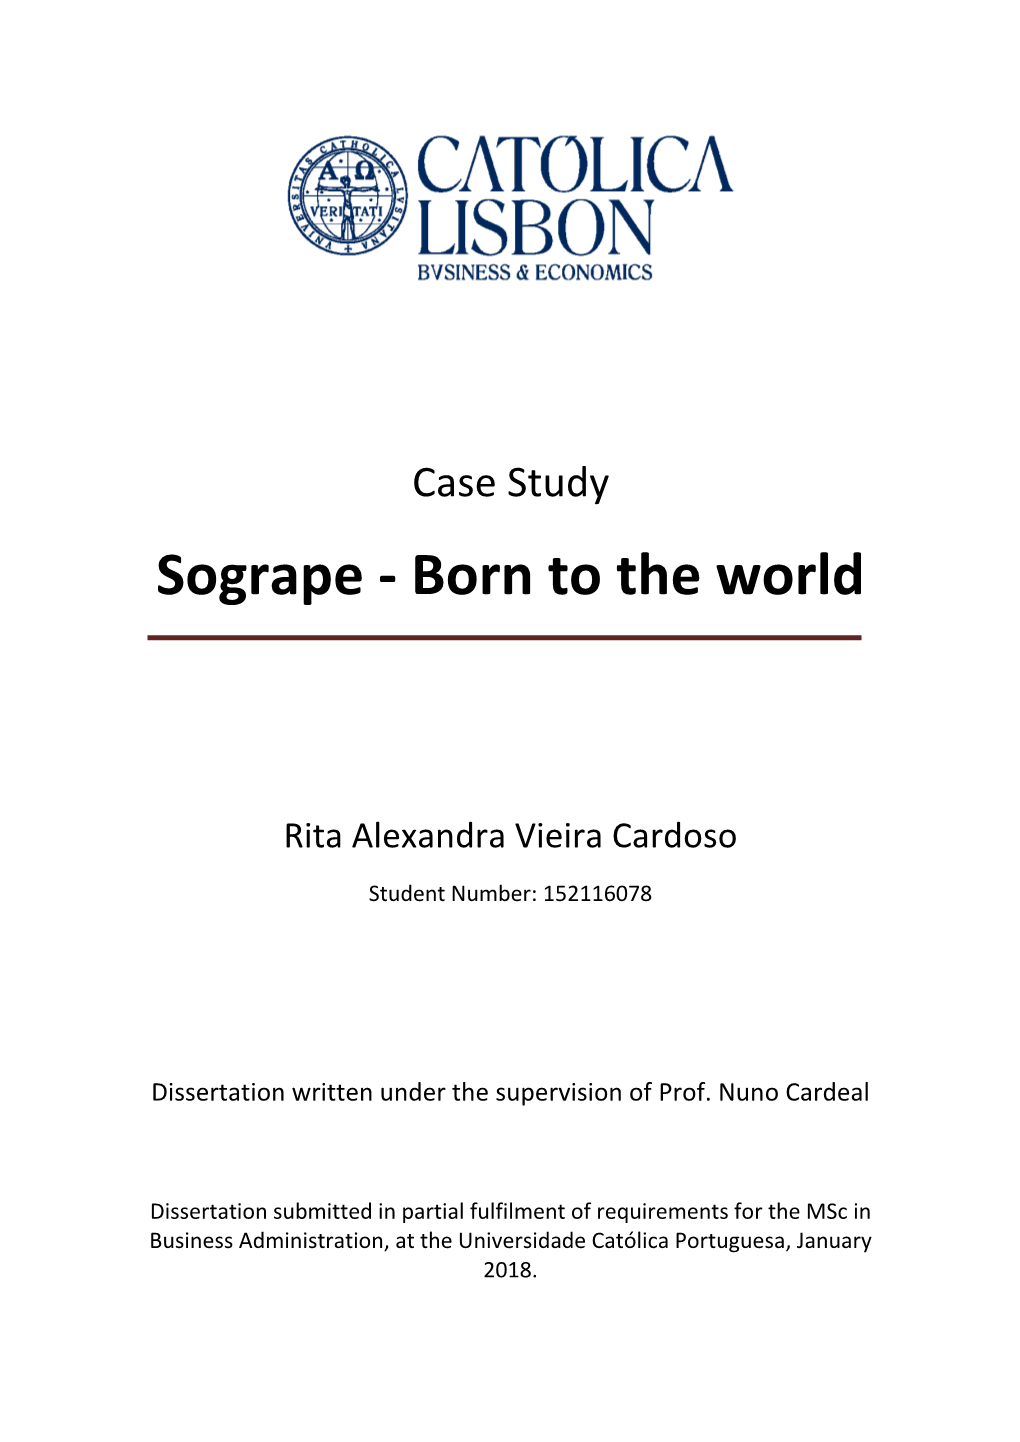 Sogrape - Born to the World